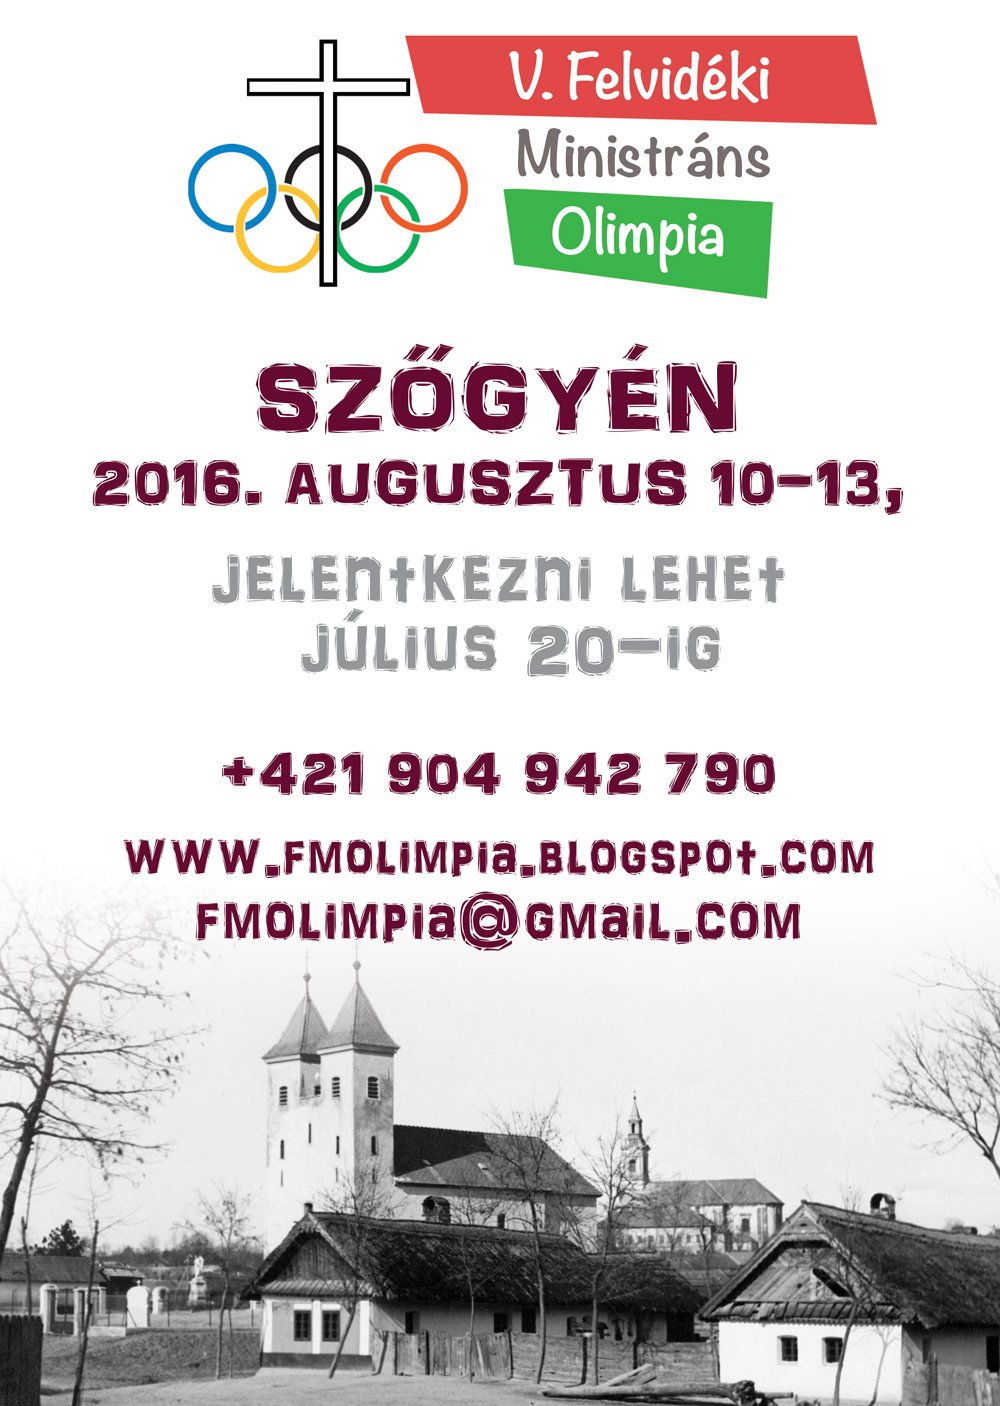 ministrans-olimpia-2016